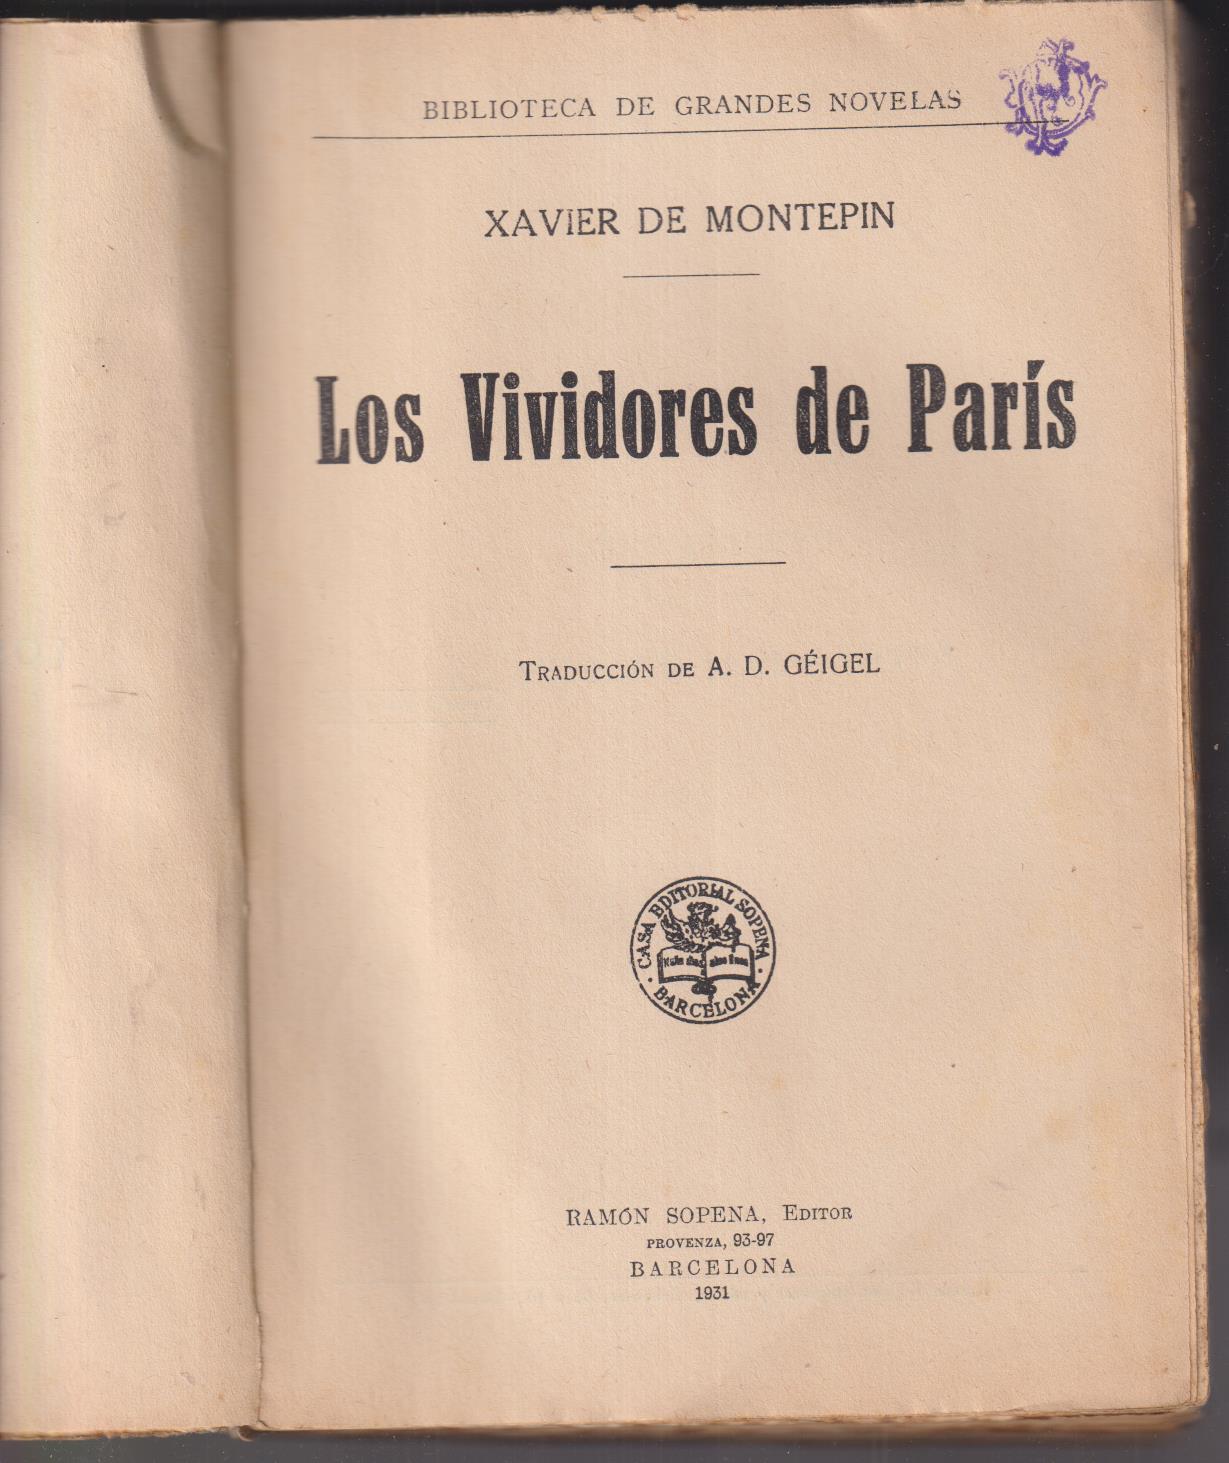 Xavier de Montépin. Los Vividores de Paris. Editorial Ramón Sopena 1931. RARO